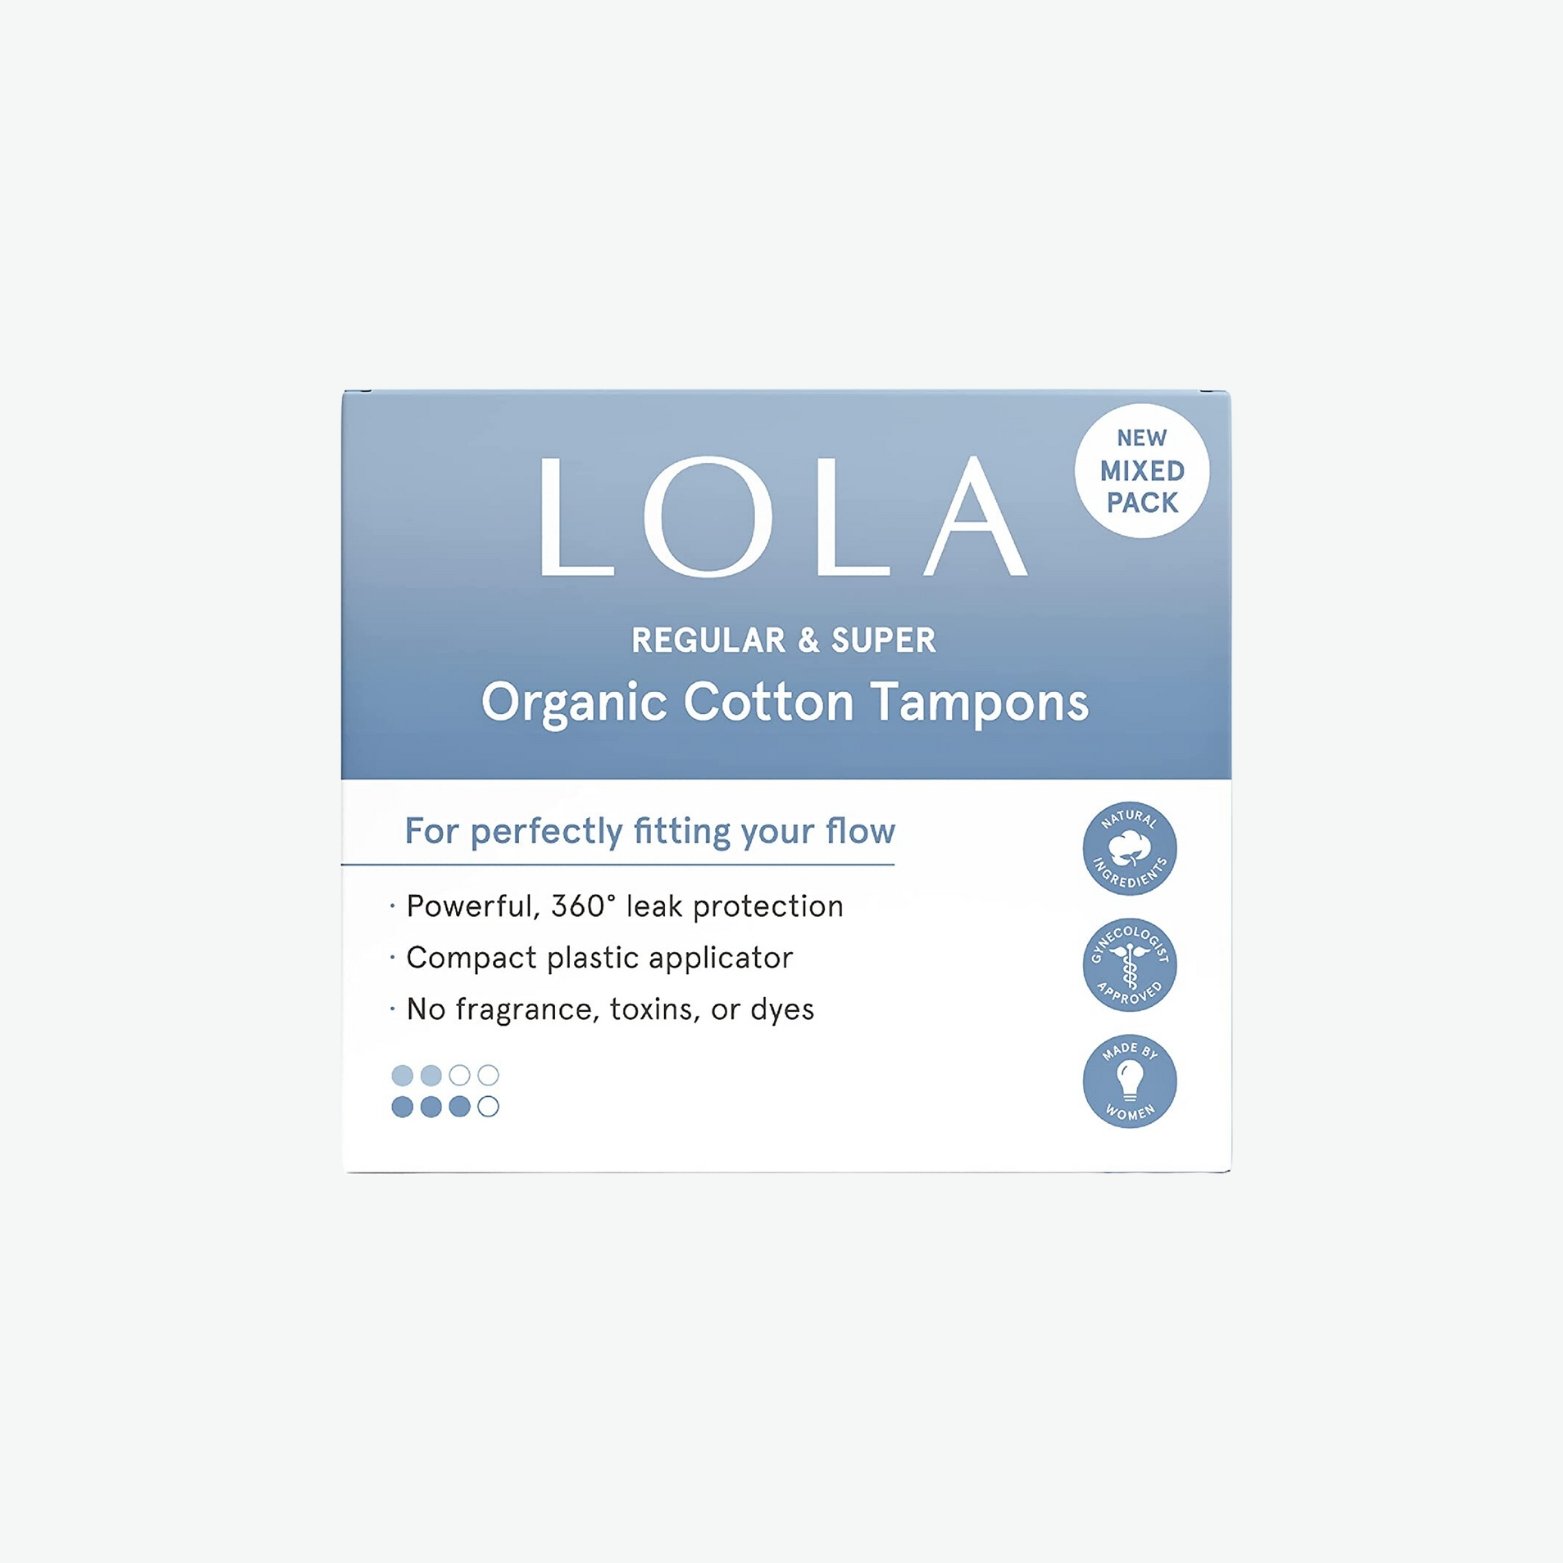 Organic Cotton Tampons copy.jpg